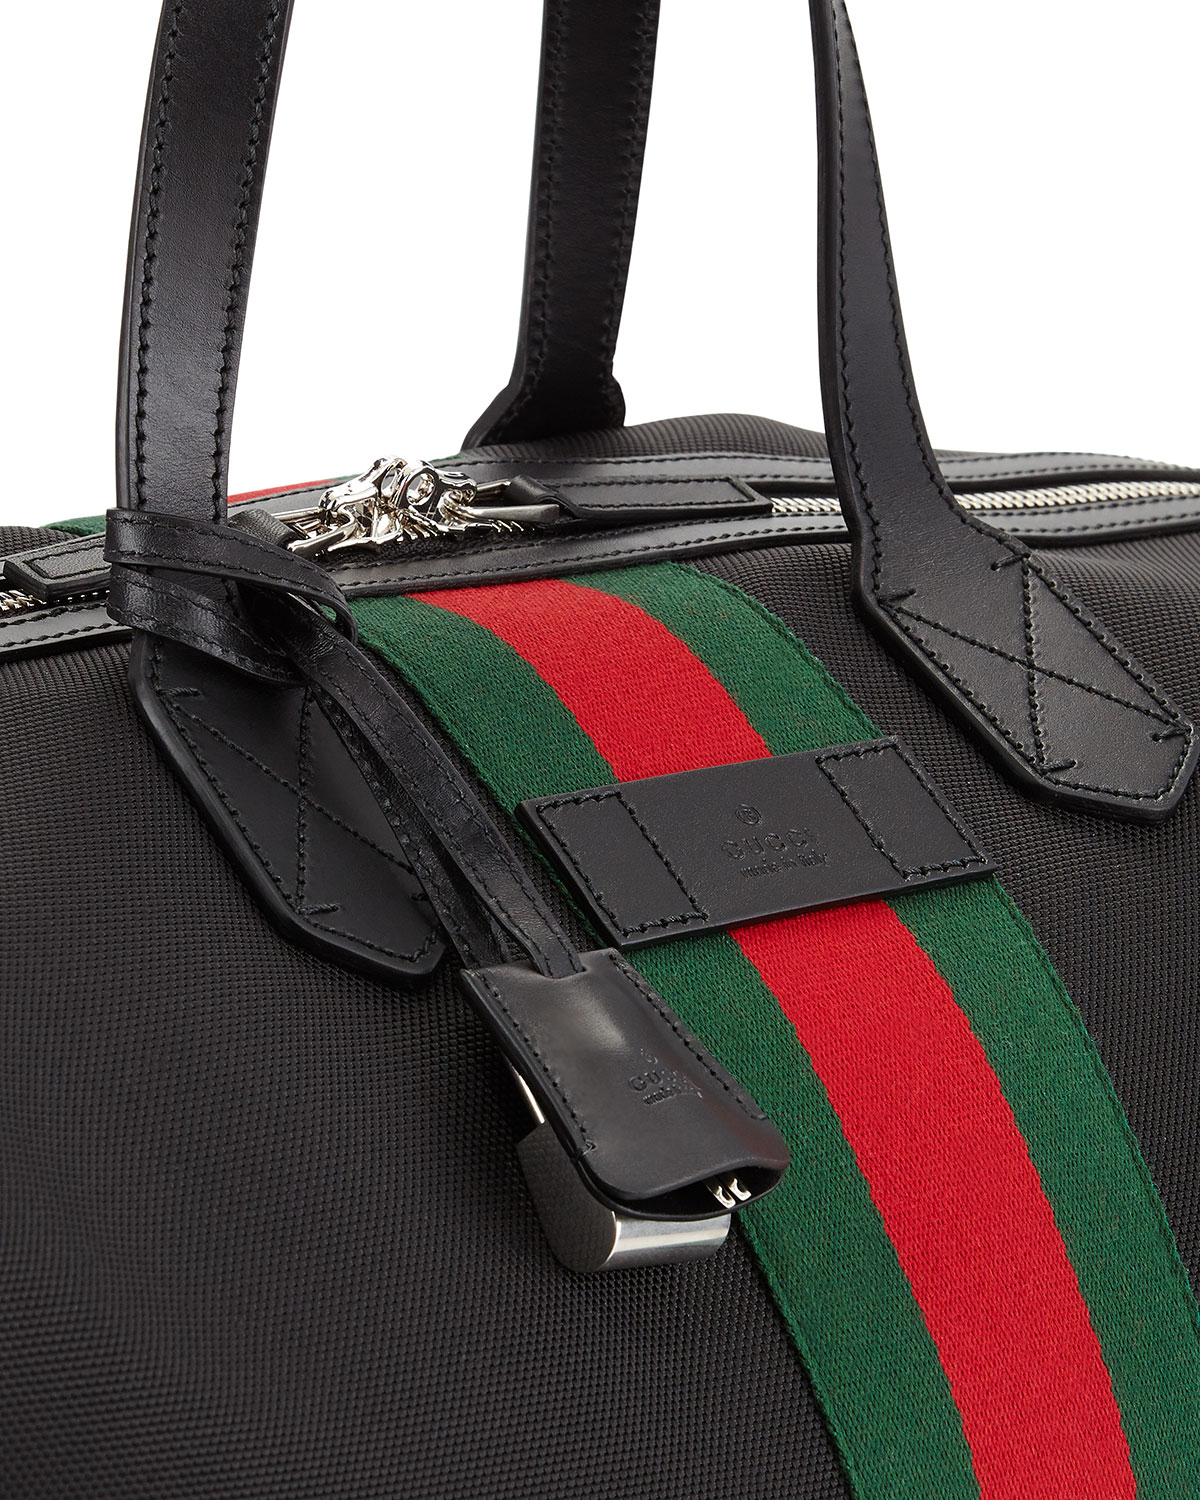 Gucci Techno Canvas Duffel Bag in Black for Men - Lyst